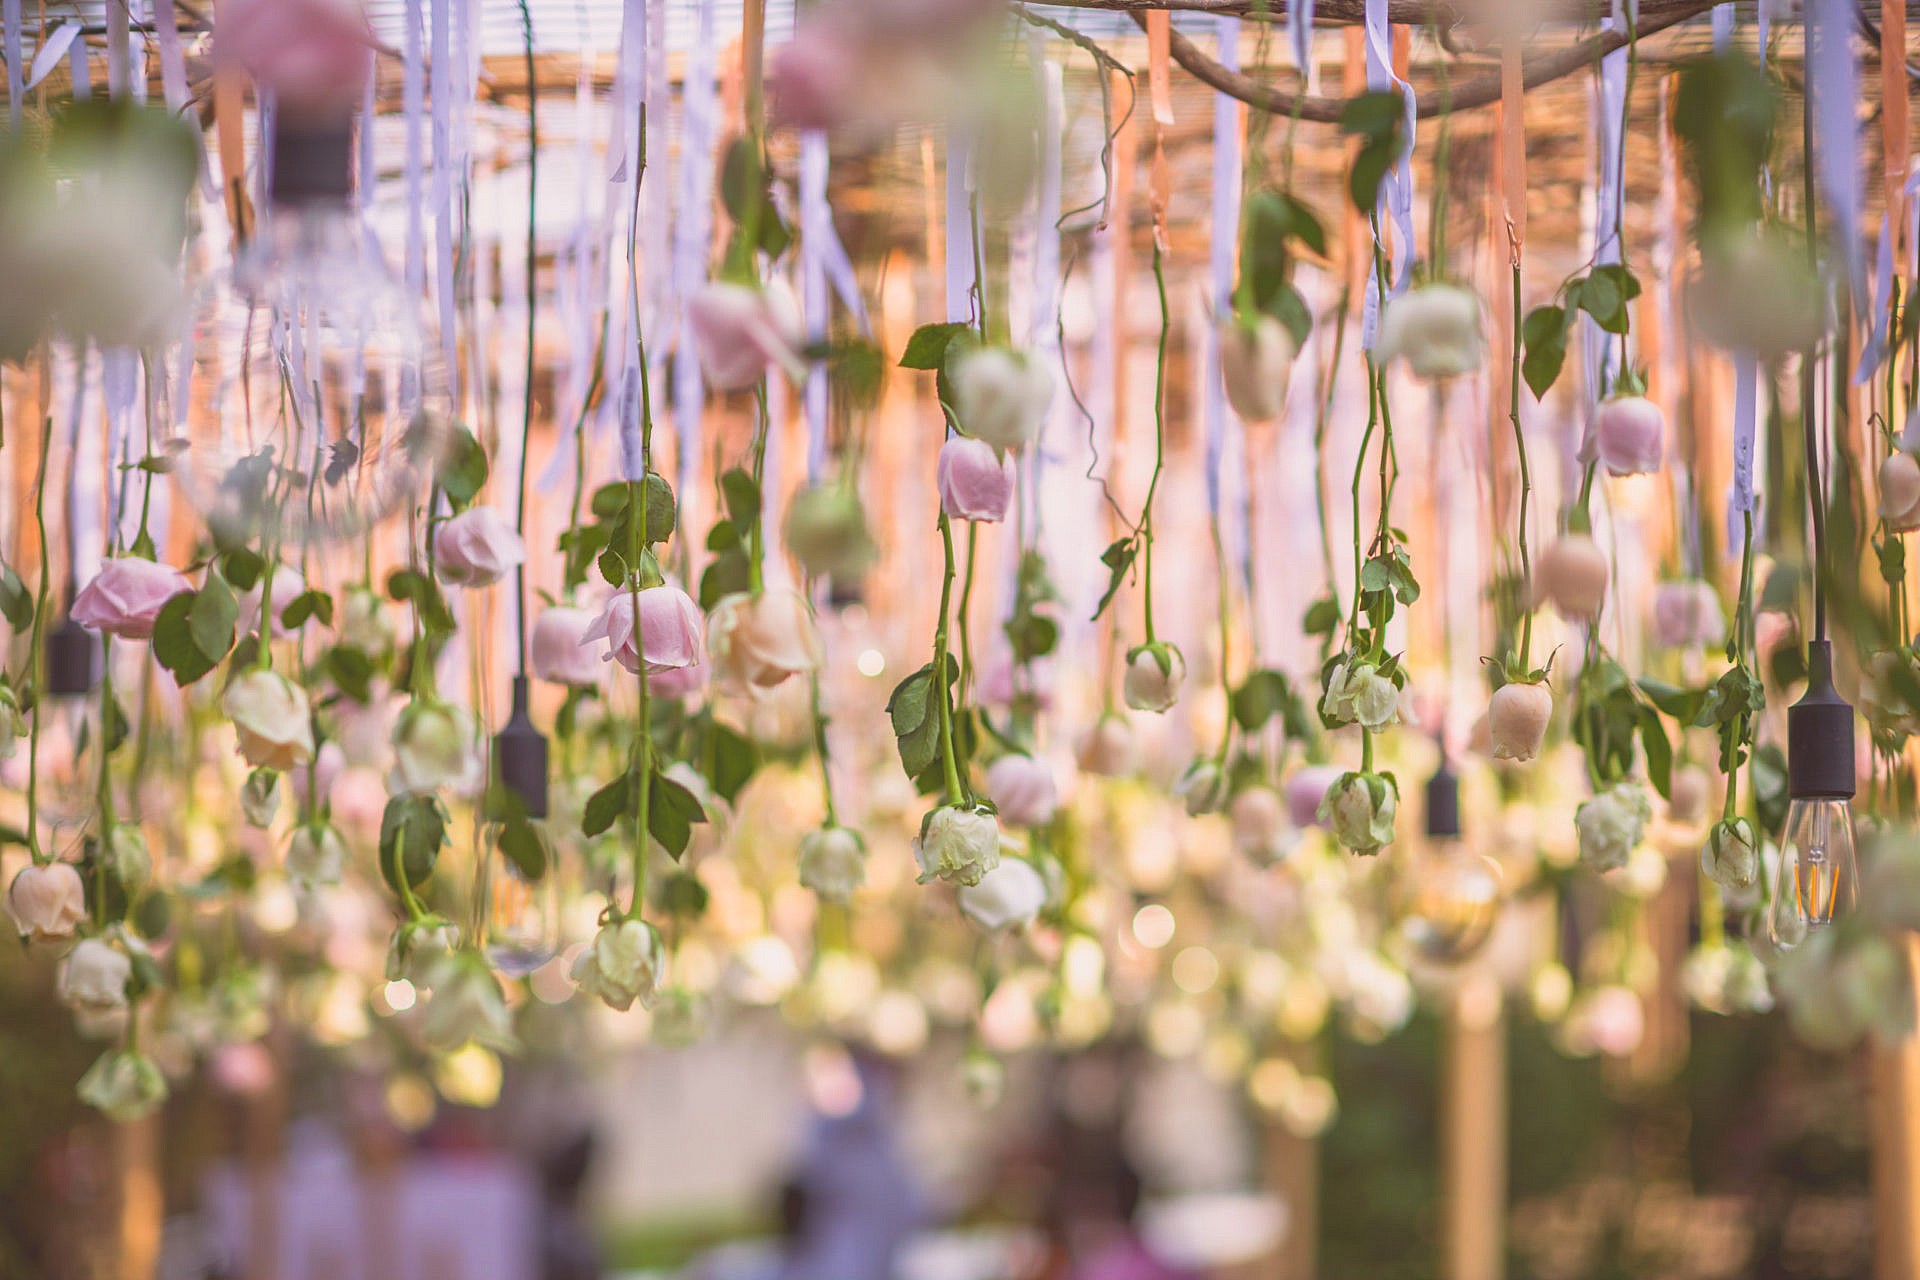 Flowers and edison bulbs make for an interesting wedding decor choice